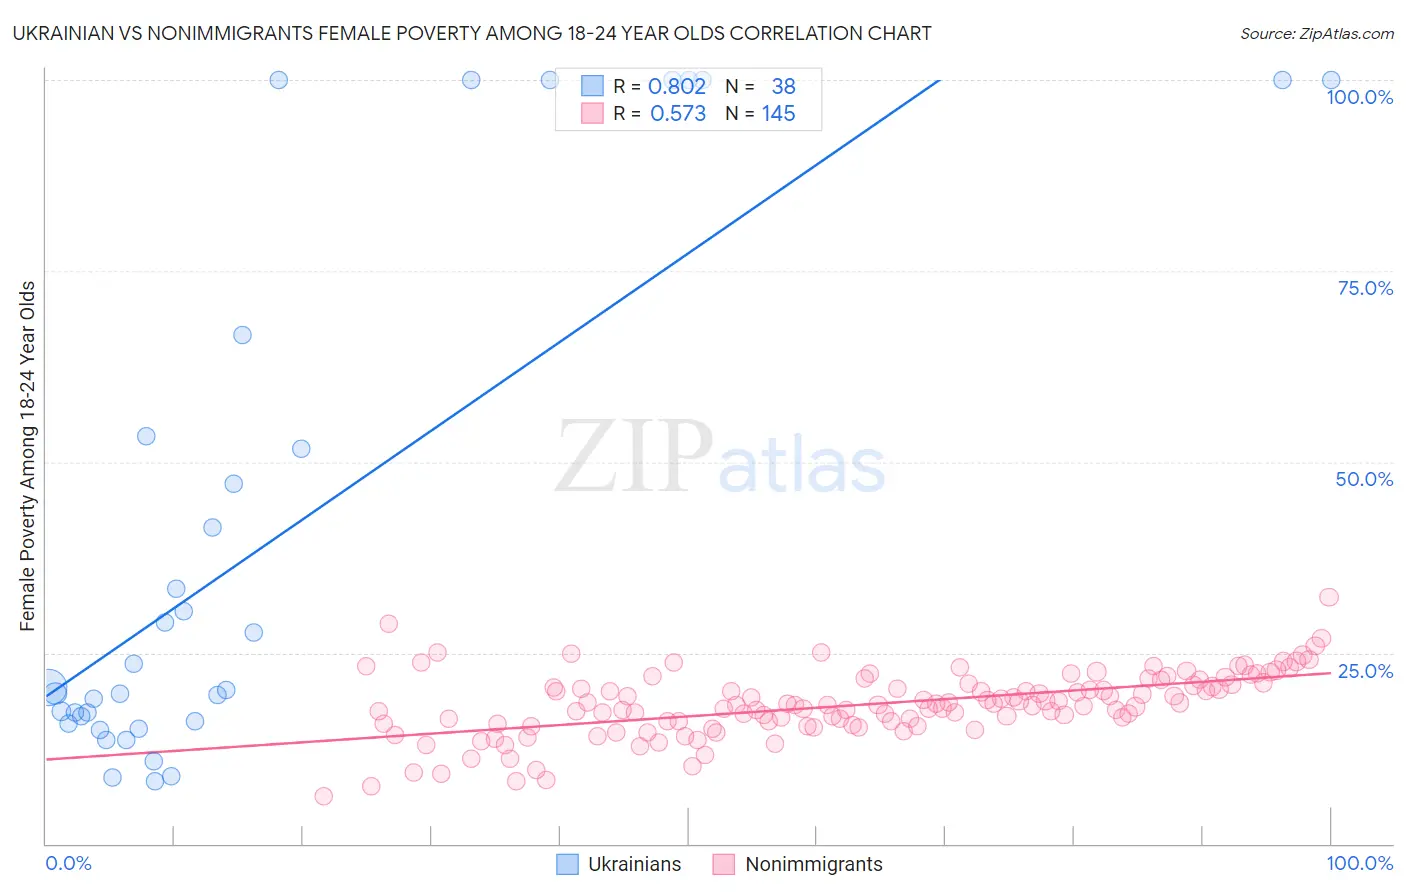 Ukrainian vs Nonimmigrants Female Poverty Among 18-24 Year Olds